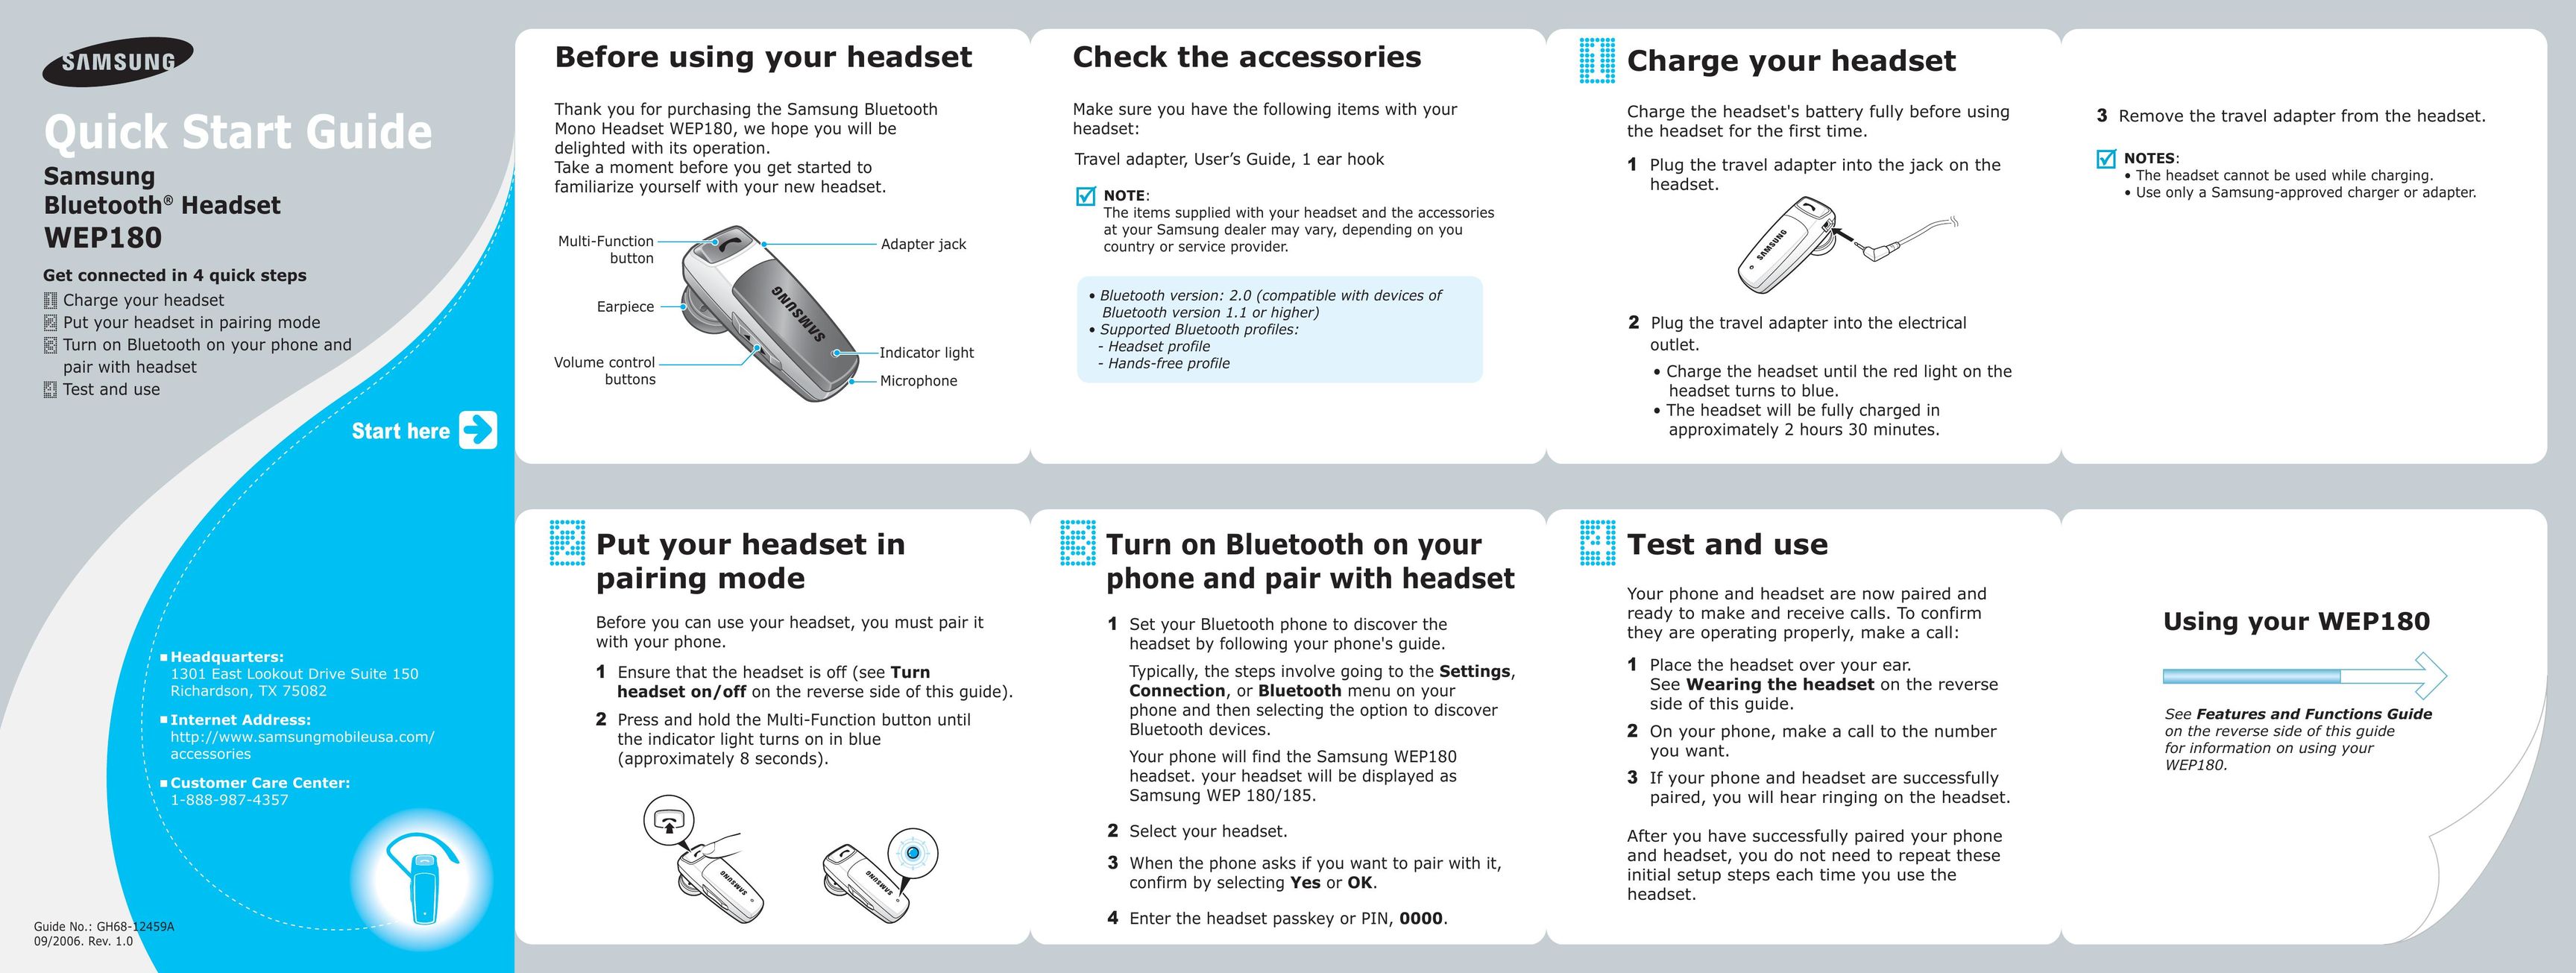 Samsung GH68-12459A Bluetooth Headset User Manual